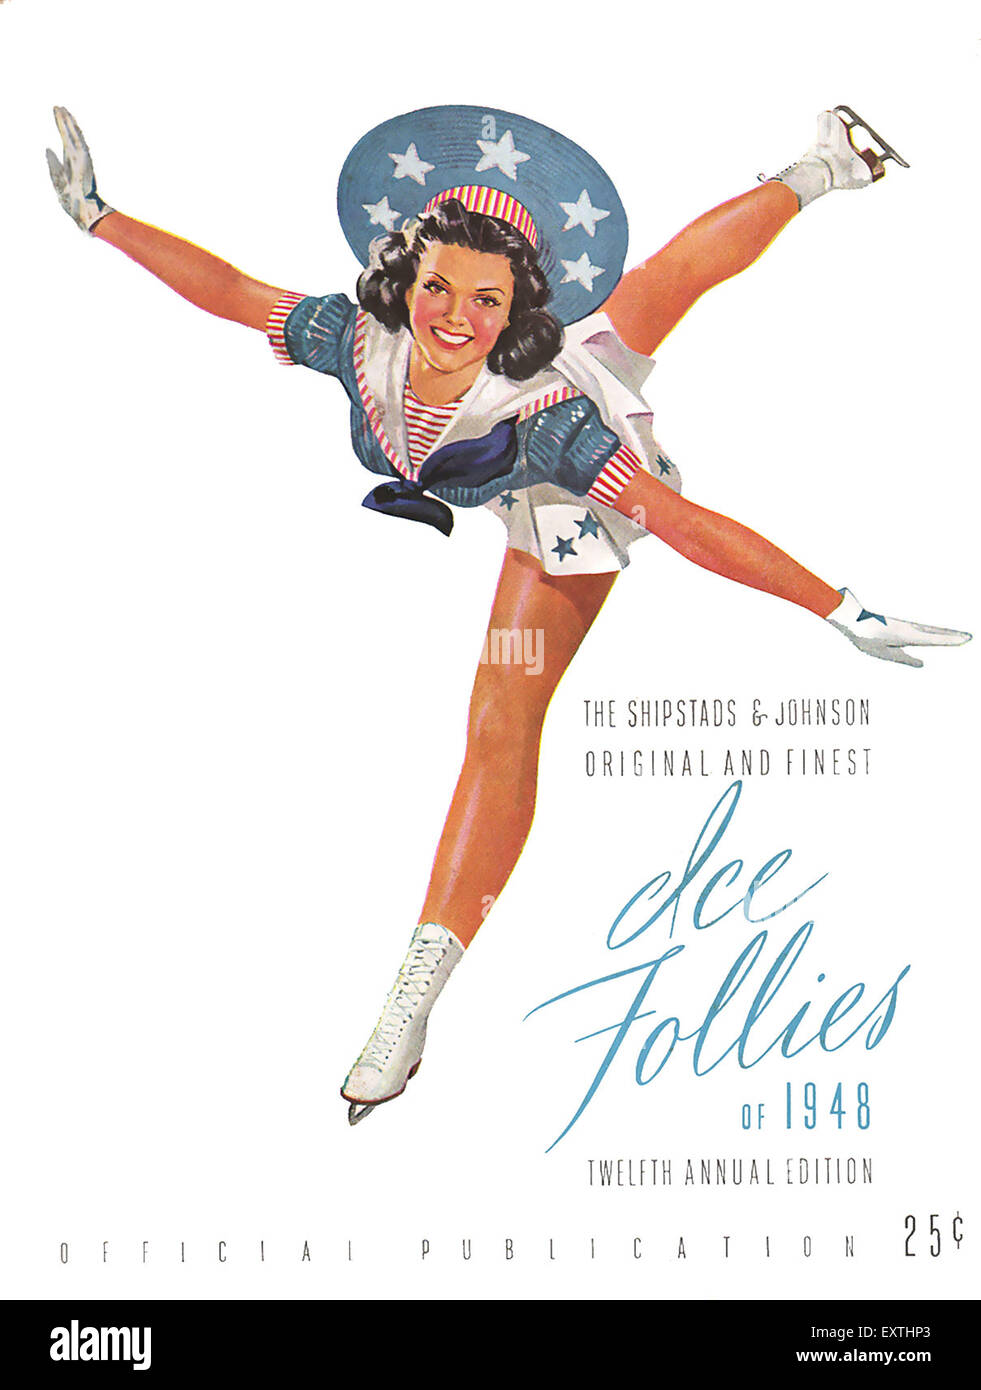 1940s USA Shipstads and Johnson Ice Follies of 1948 Magazine Advert Stock Photo